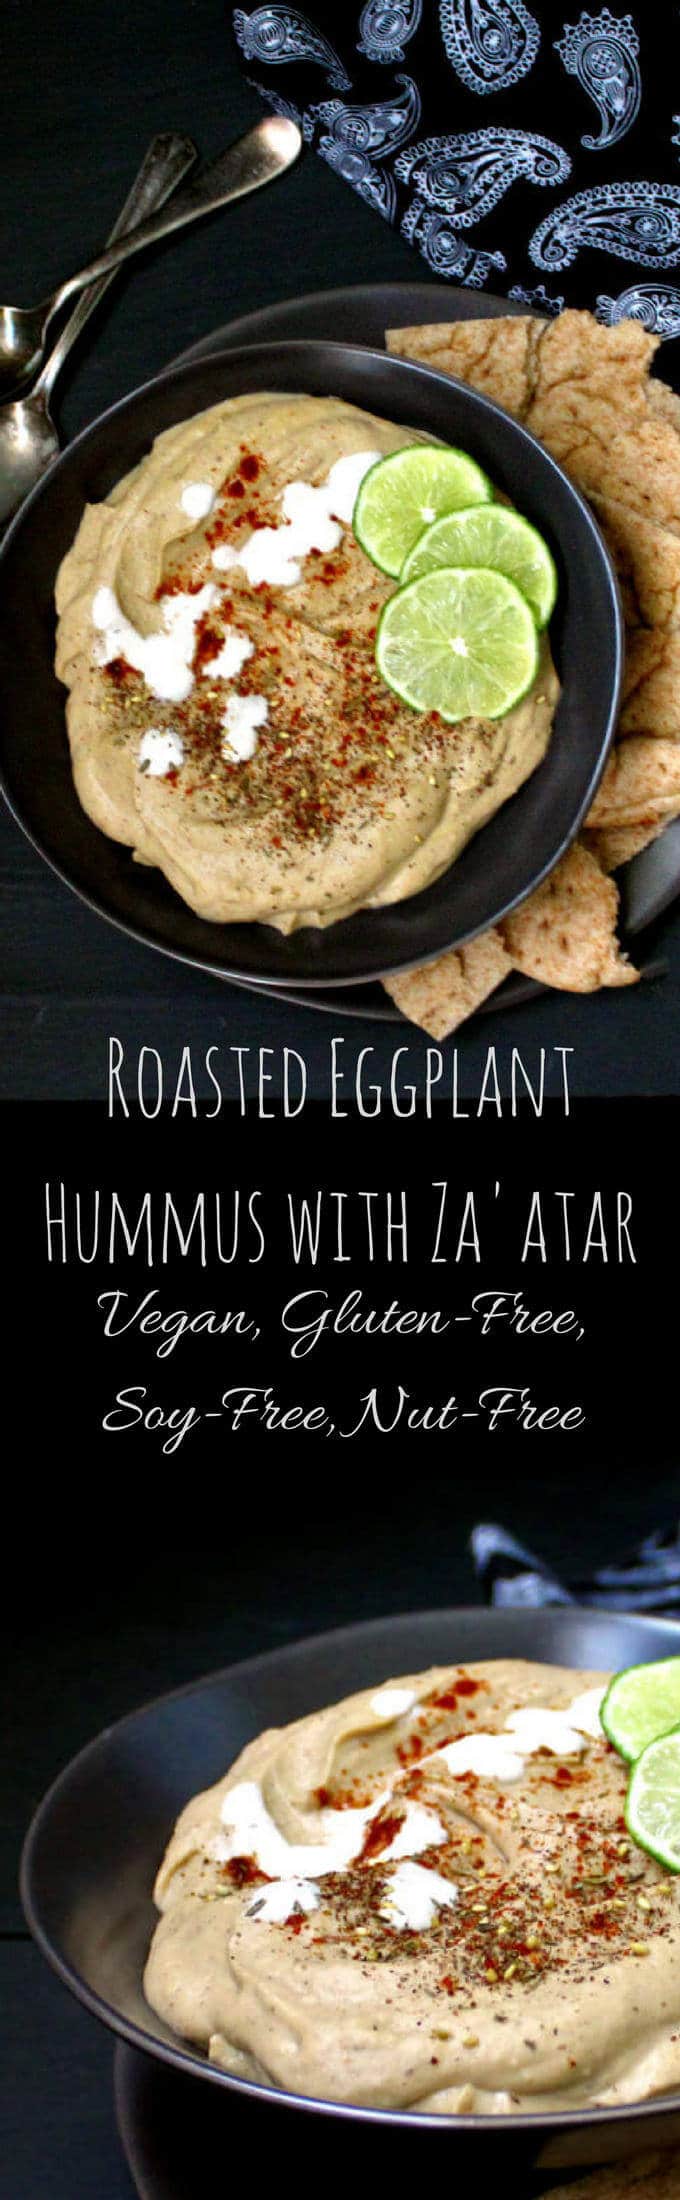 Roasted Eggplant Hummus with Za'atar Spice Mix #vegan #hummus #eggplant #glutenfree #soyfree #nutfree - HolyCowVegan.net